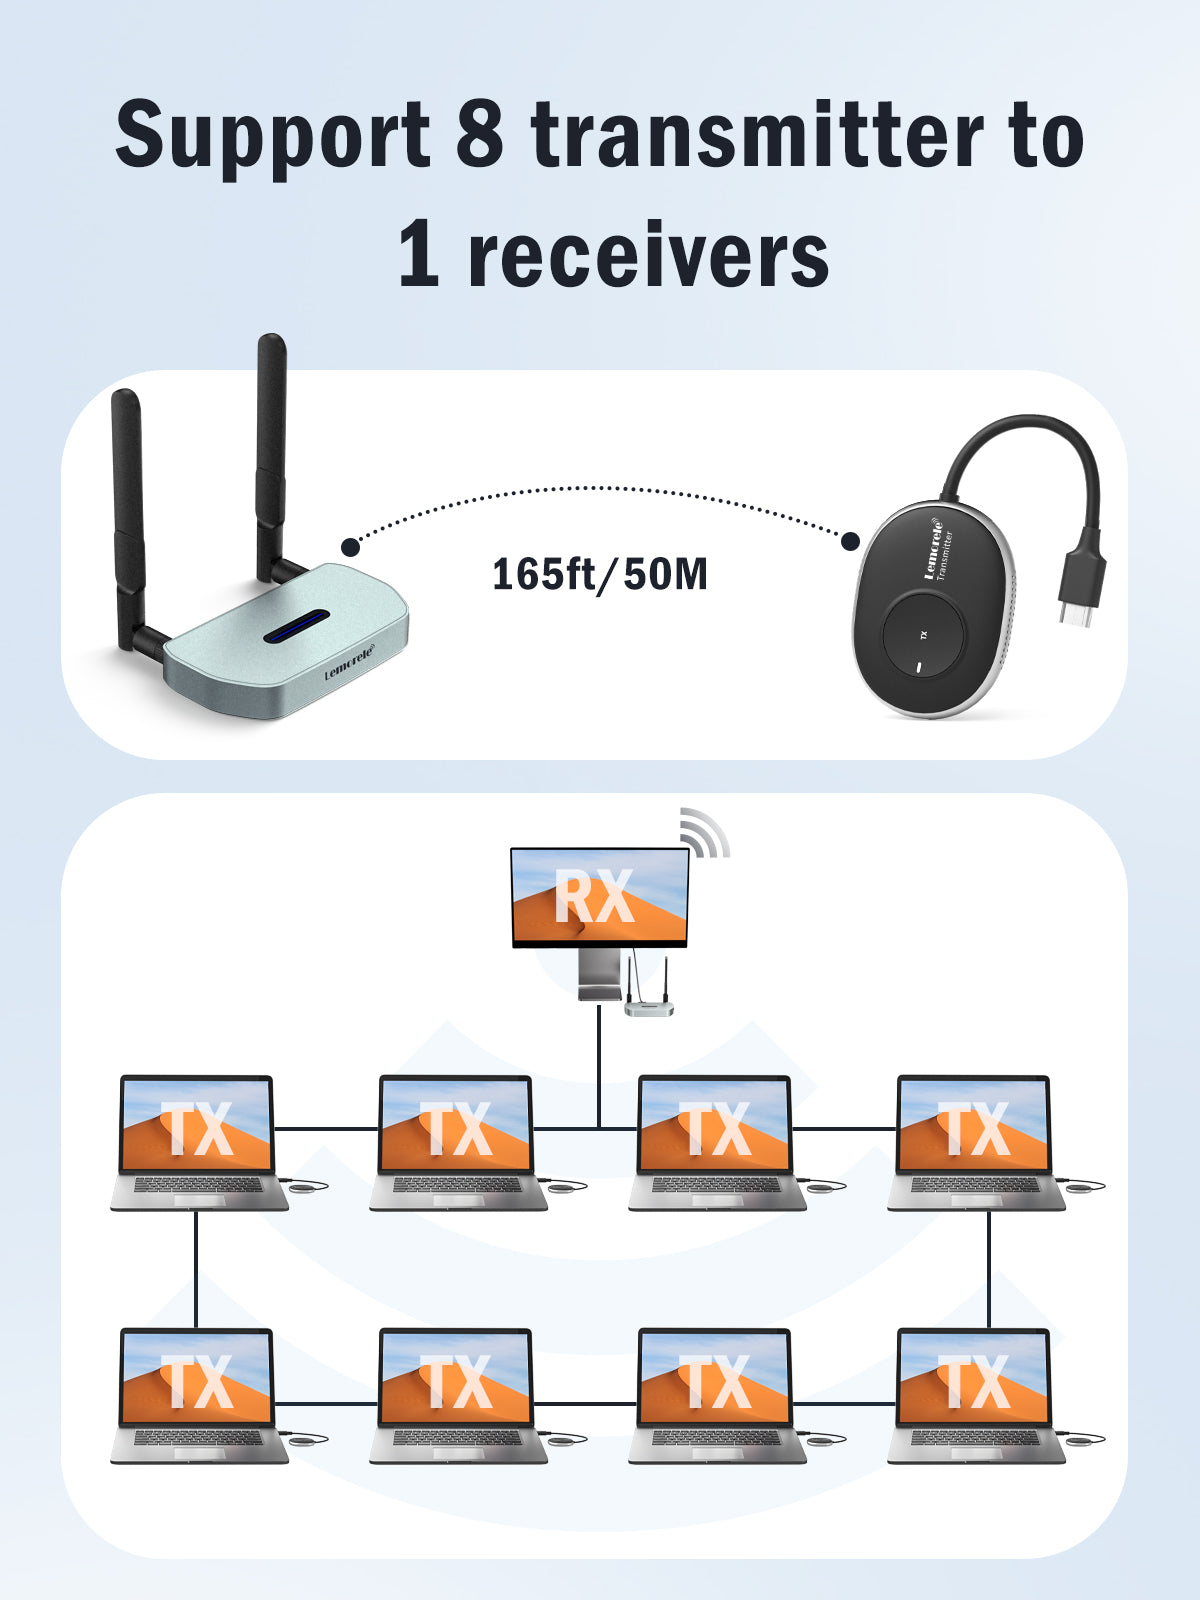 Lemorele HDMI Wireless Extender Streaming Video Kit for Switch,PS4 Lap